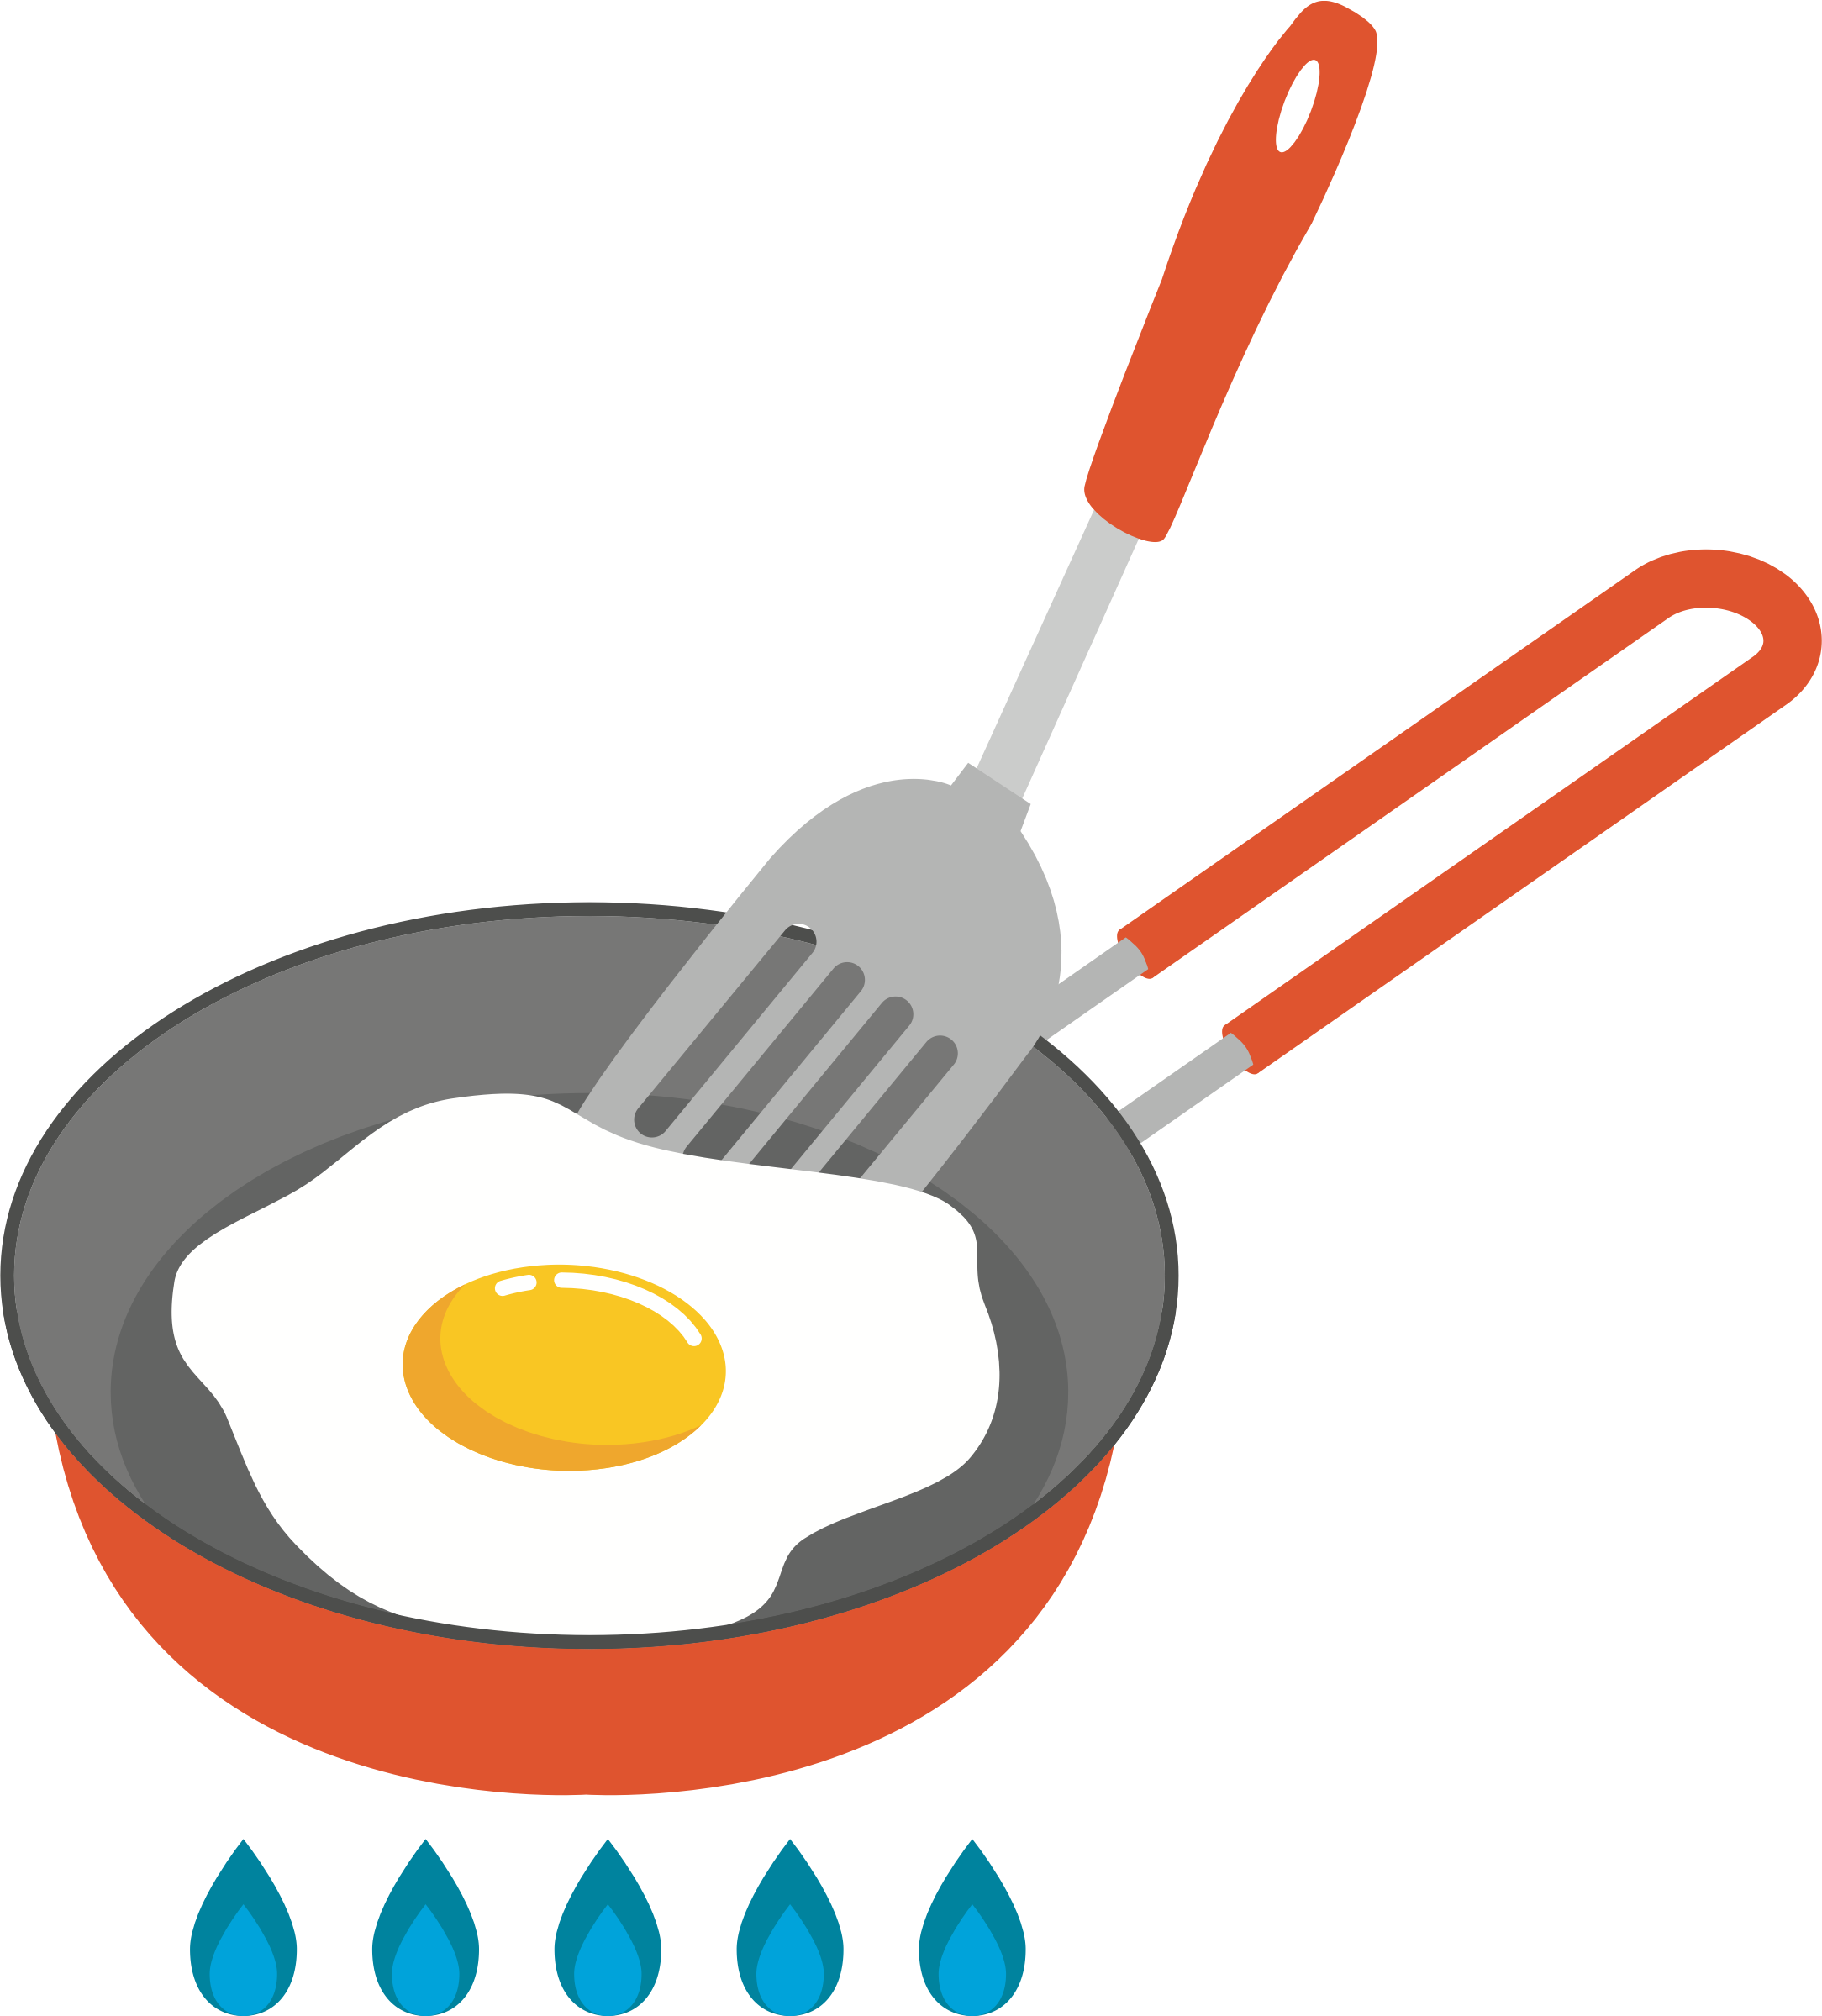 Big Image - Fried Egg (2168x2399)